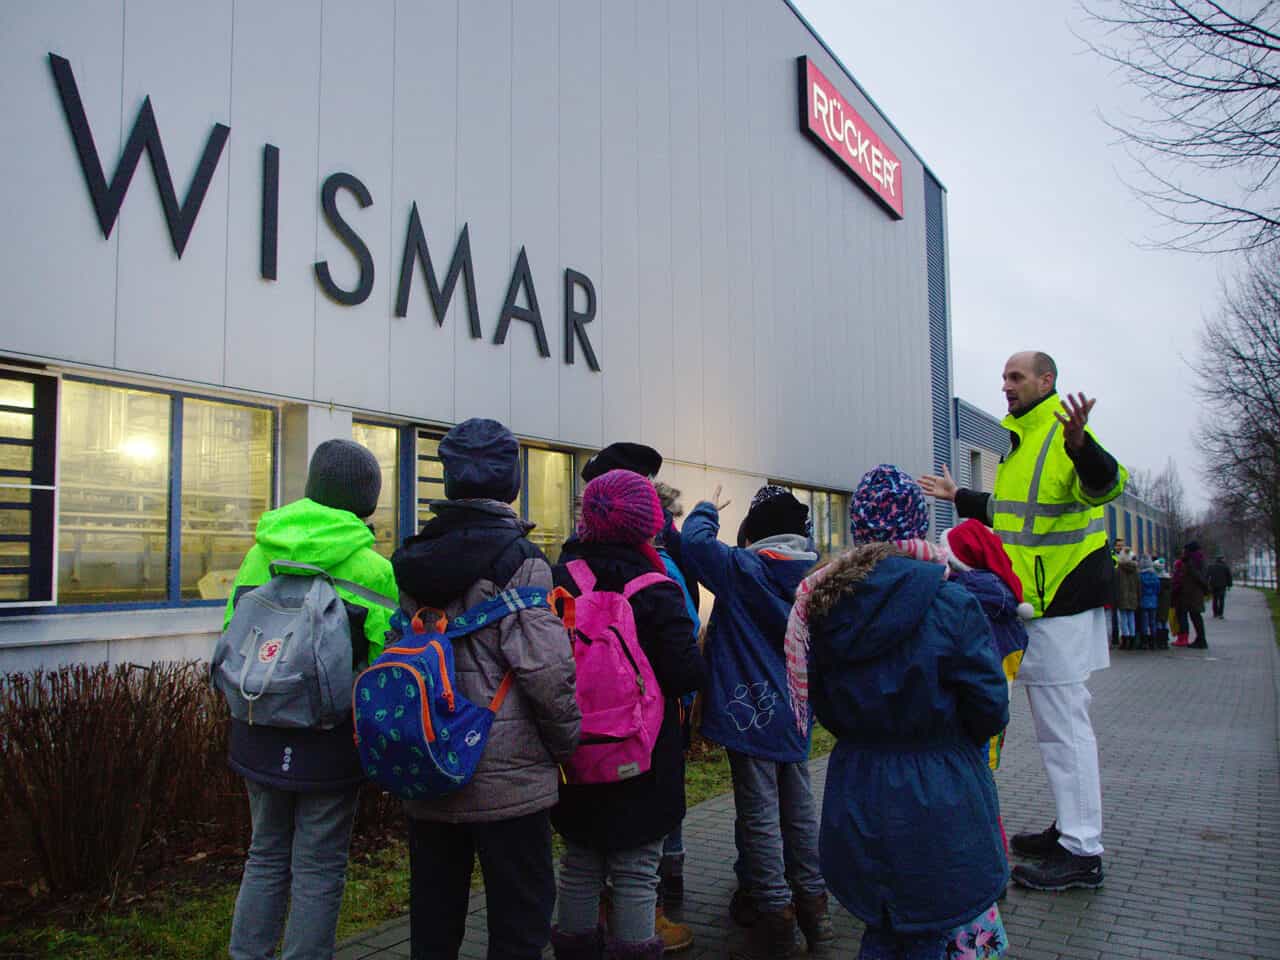 Grundschüler zu Besuch bei Molkerei Rücker in Wismar